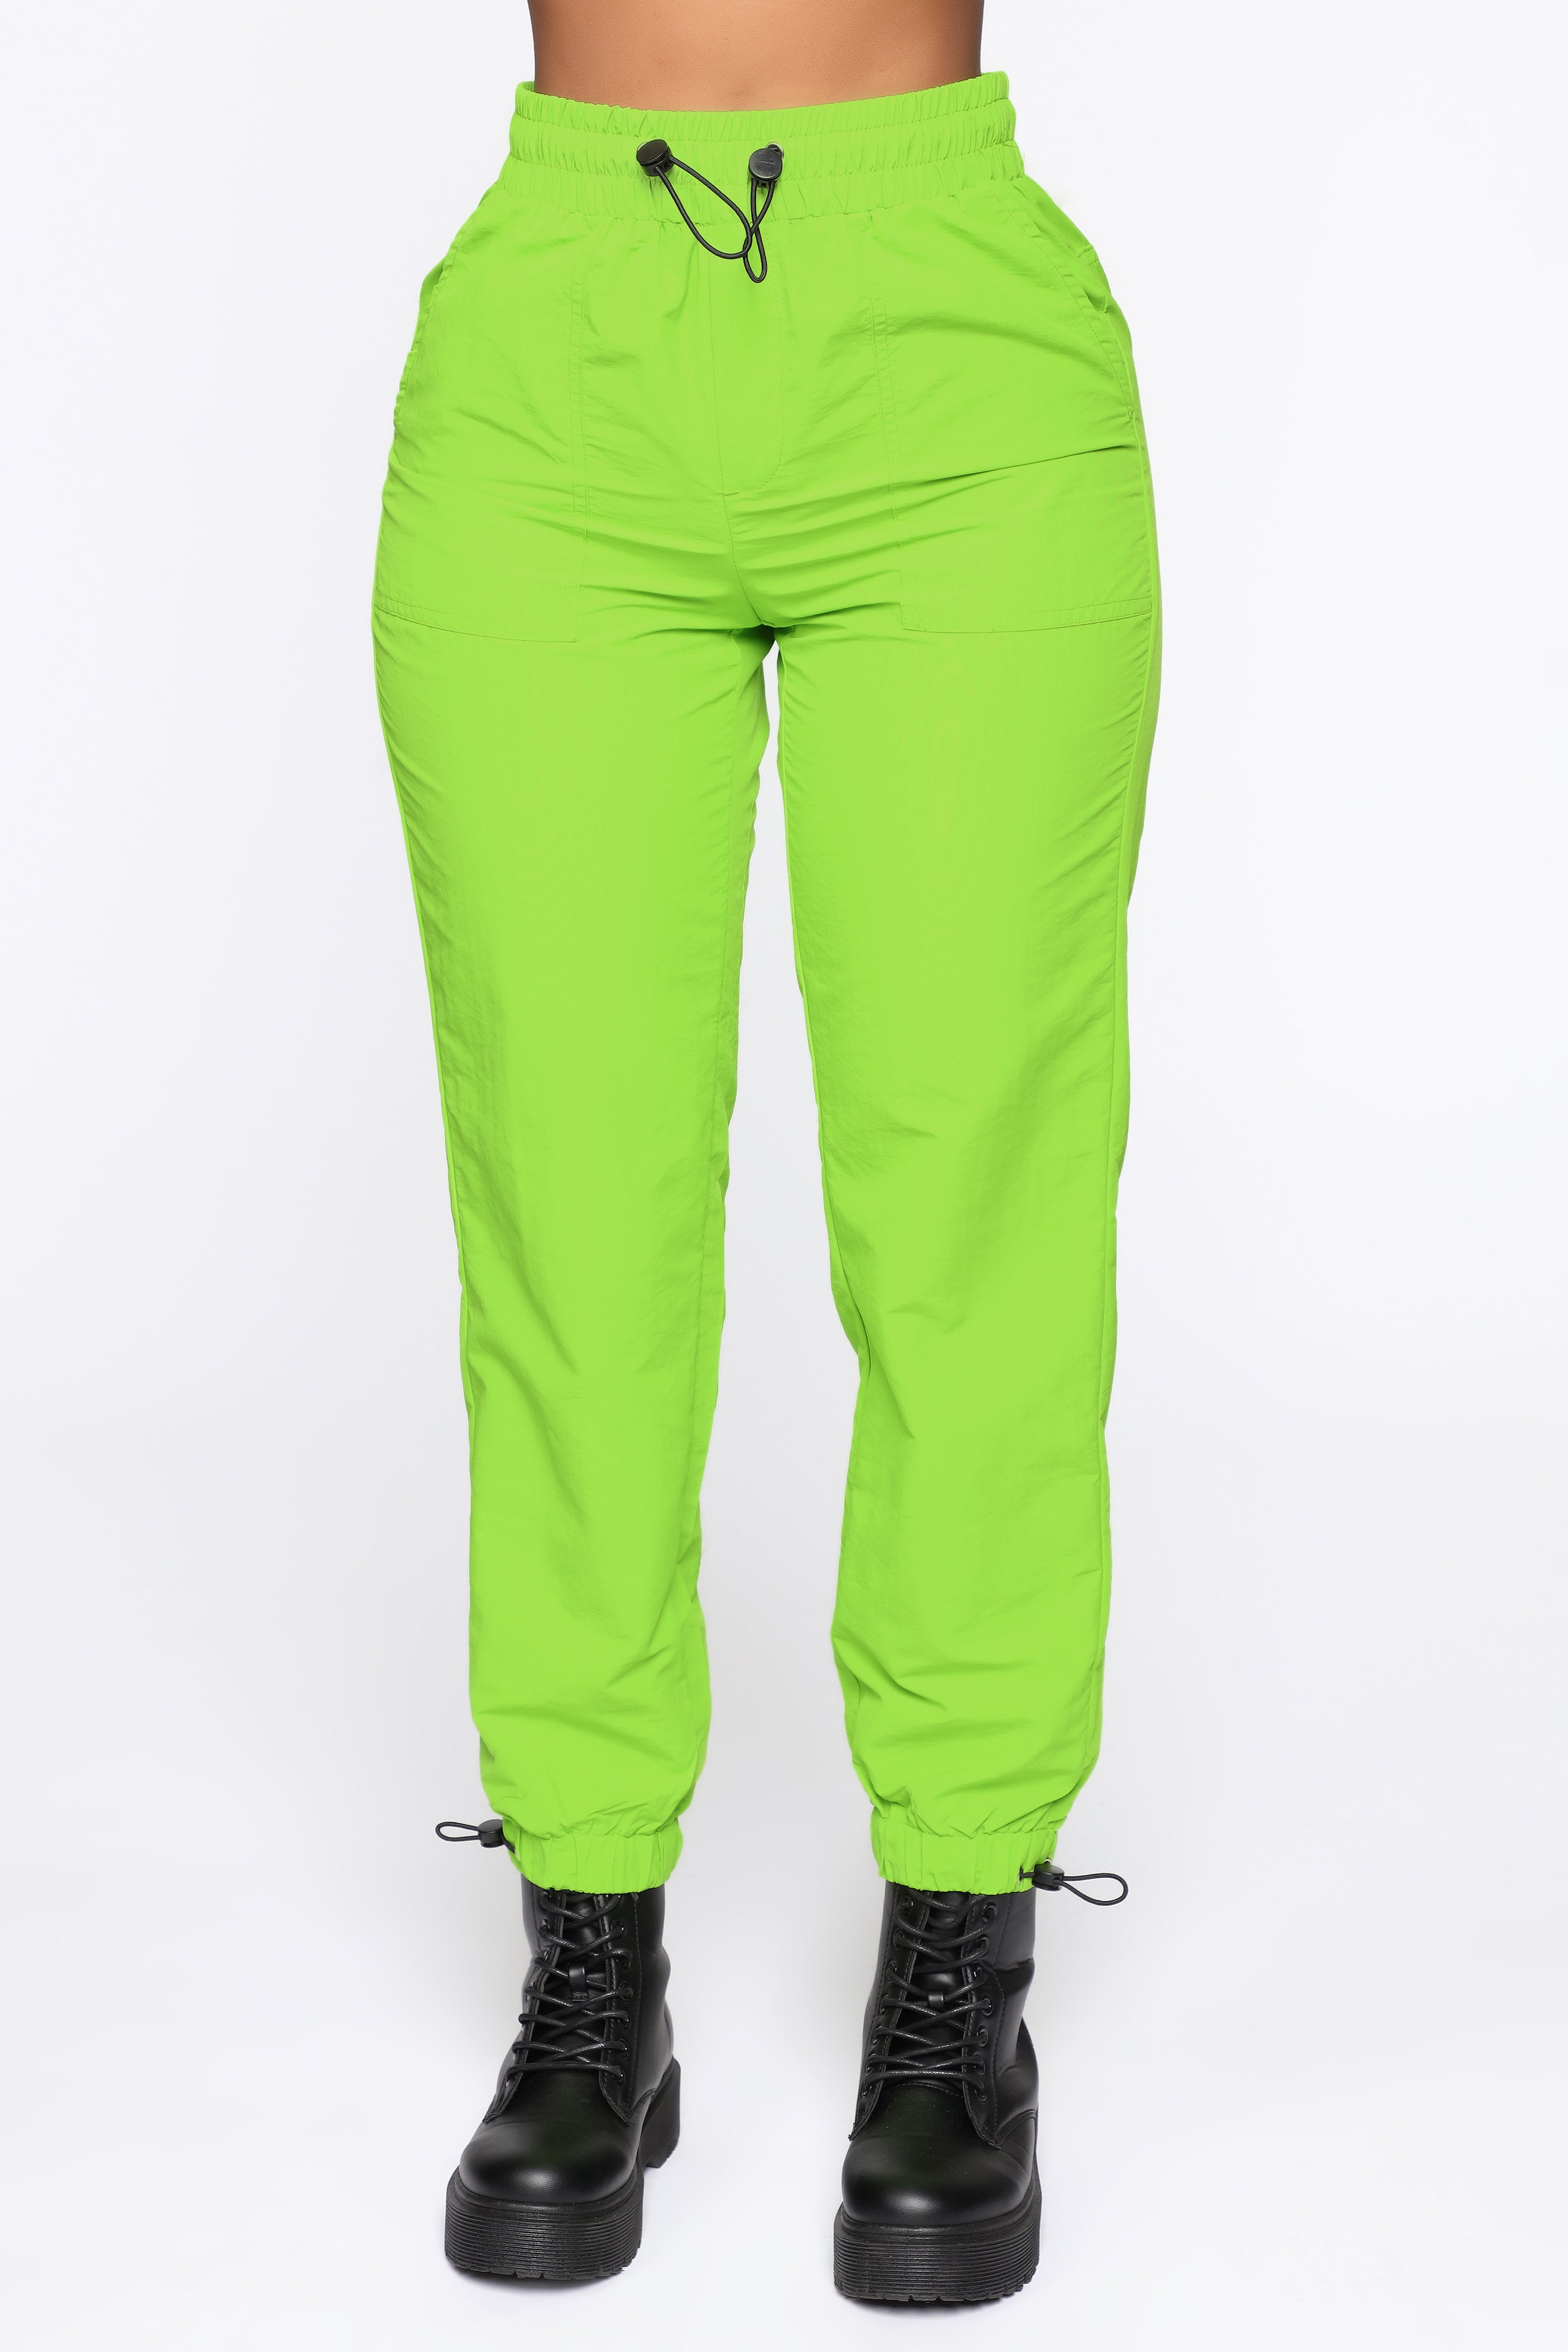 On The Go Drawstring Joggers - Neon Green | Fashion Nova, Pants Fashion Nova